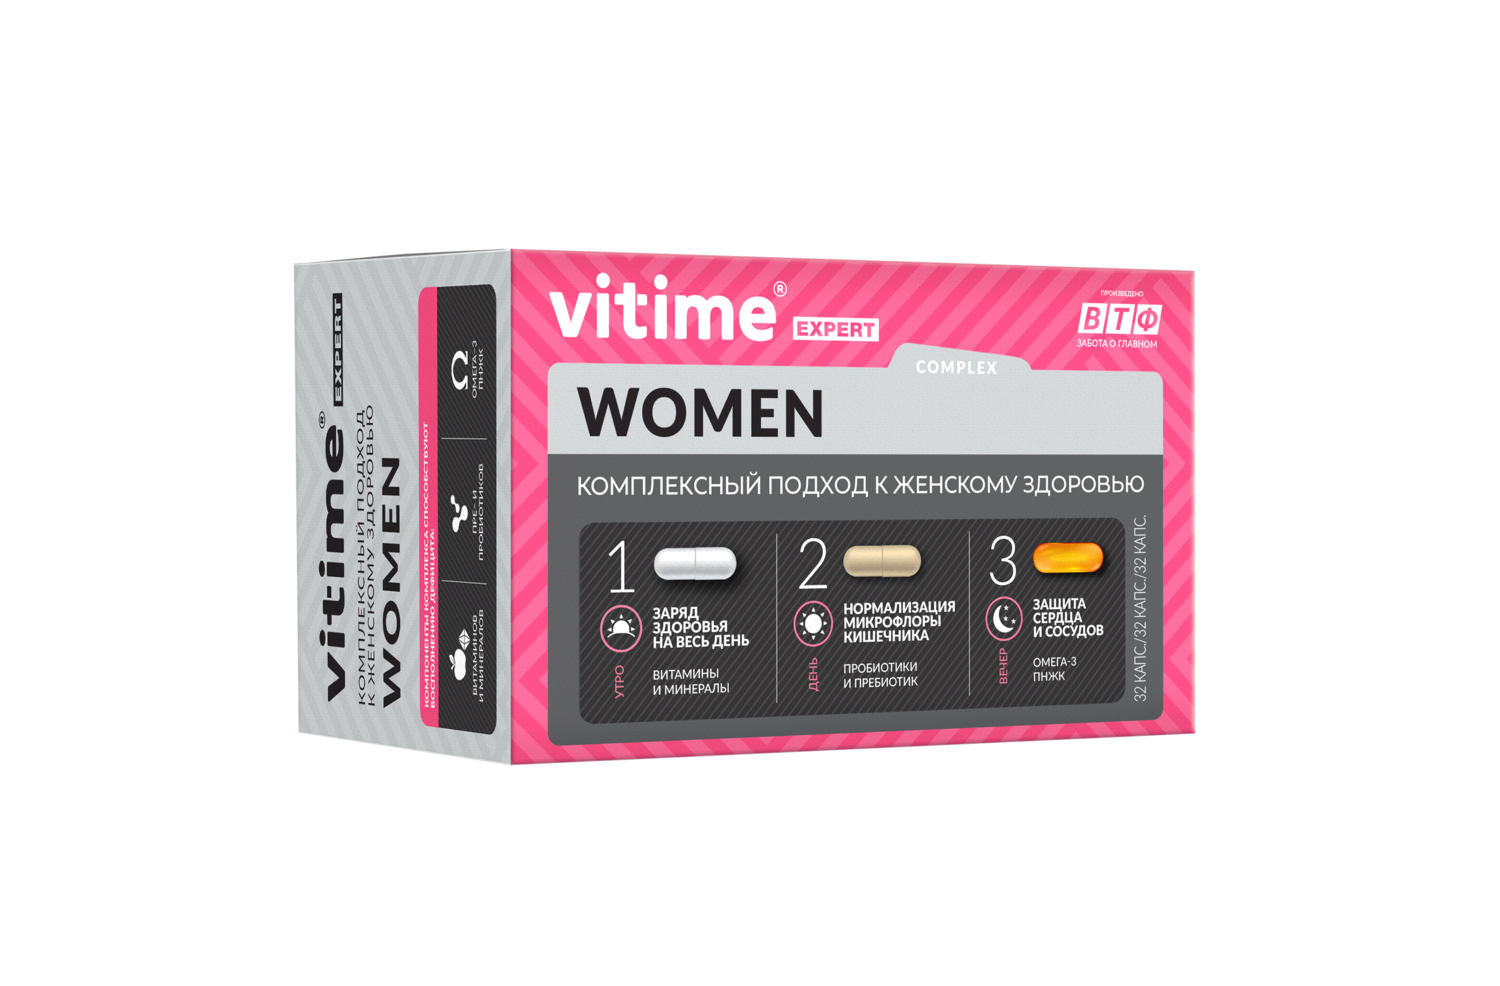 Vitime women. Витайм эксперт. Vitime витамины. Vitime Expert men (Витайм эксперт для мужчин).